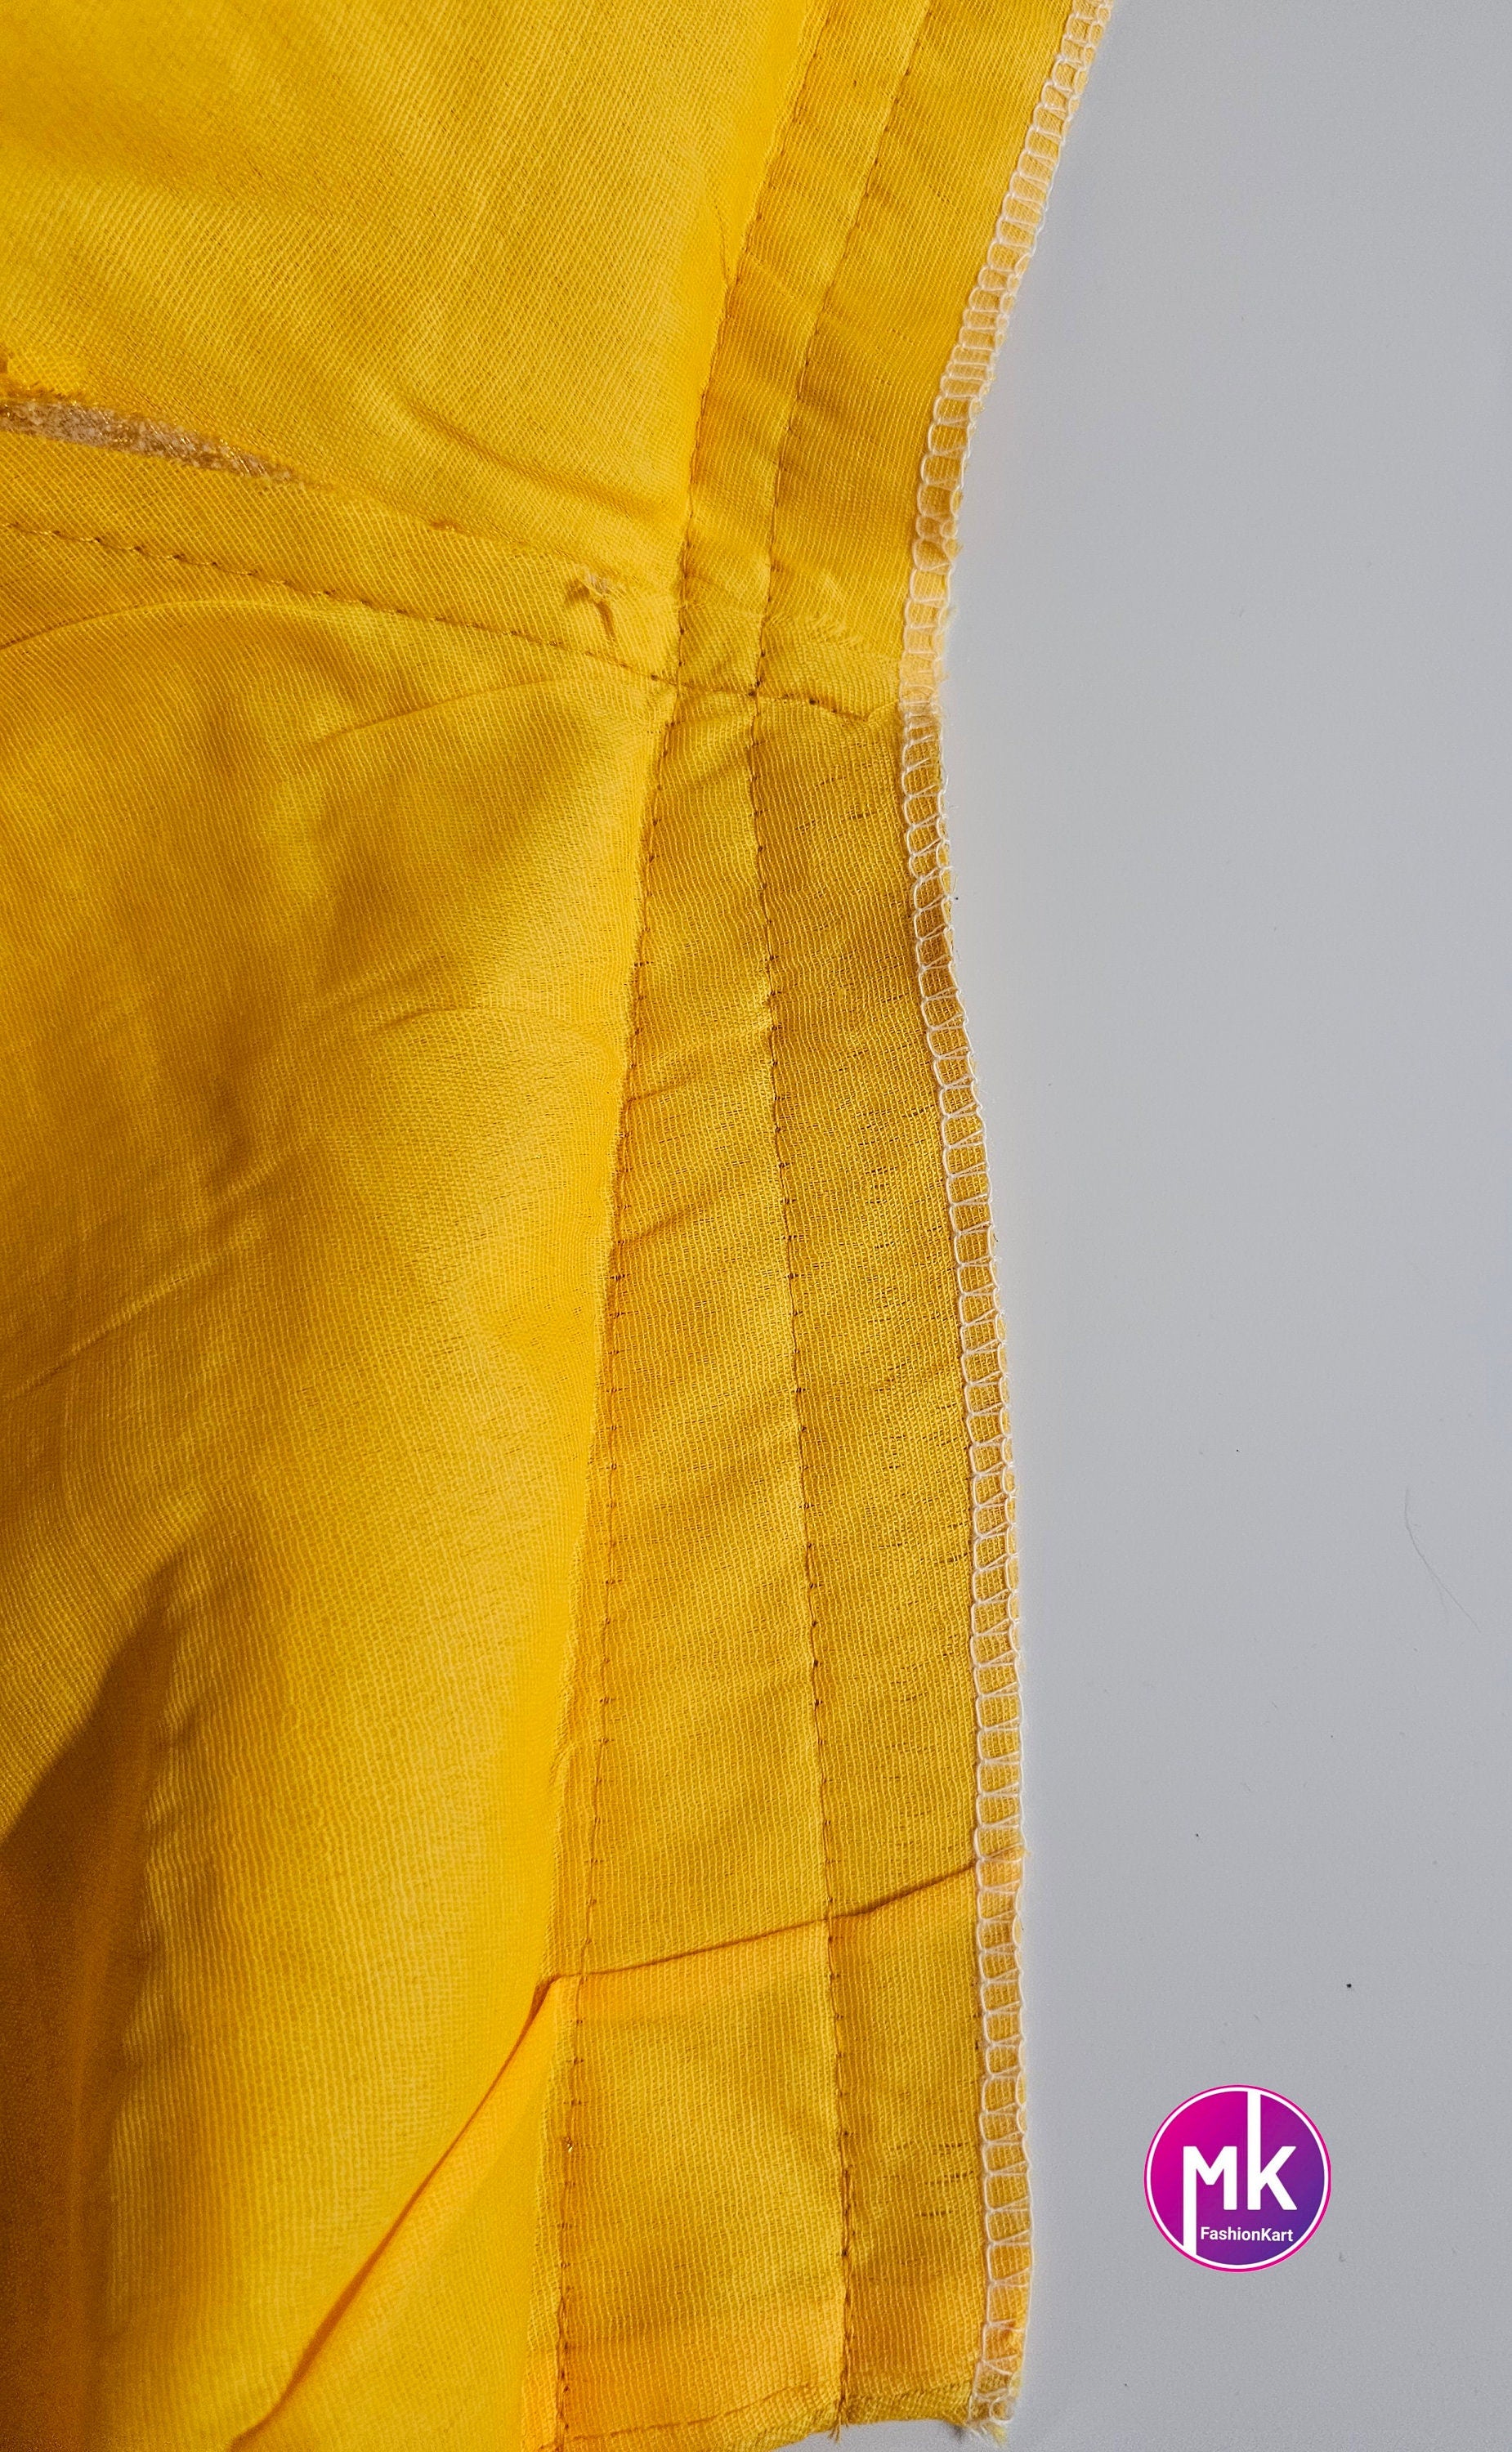 Readymade Saree Blouse - Yellow Color with golden design Blouse - Princess cut Blouse - Size 38" (Upto 40")